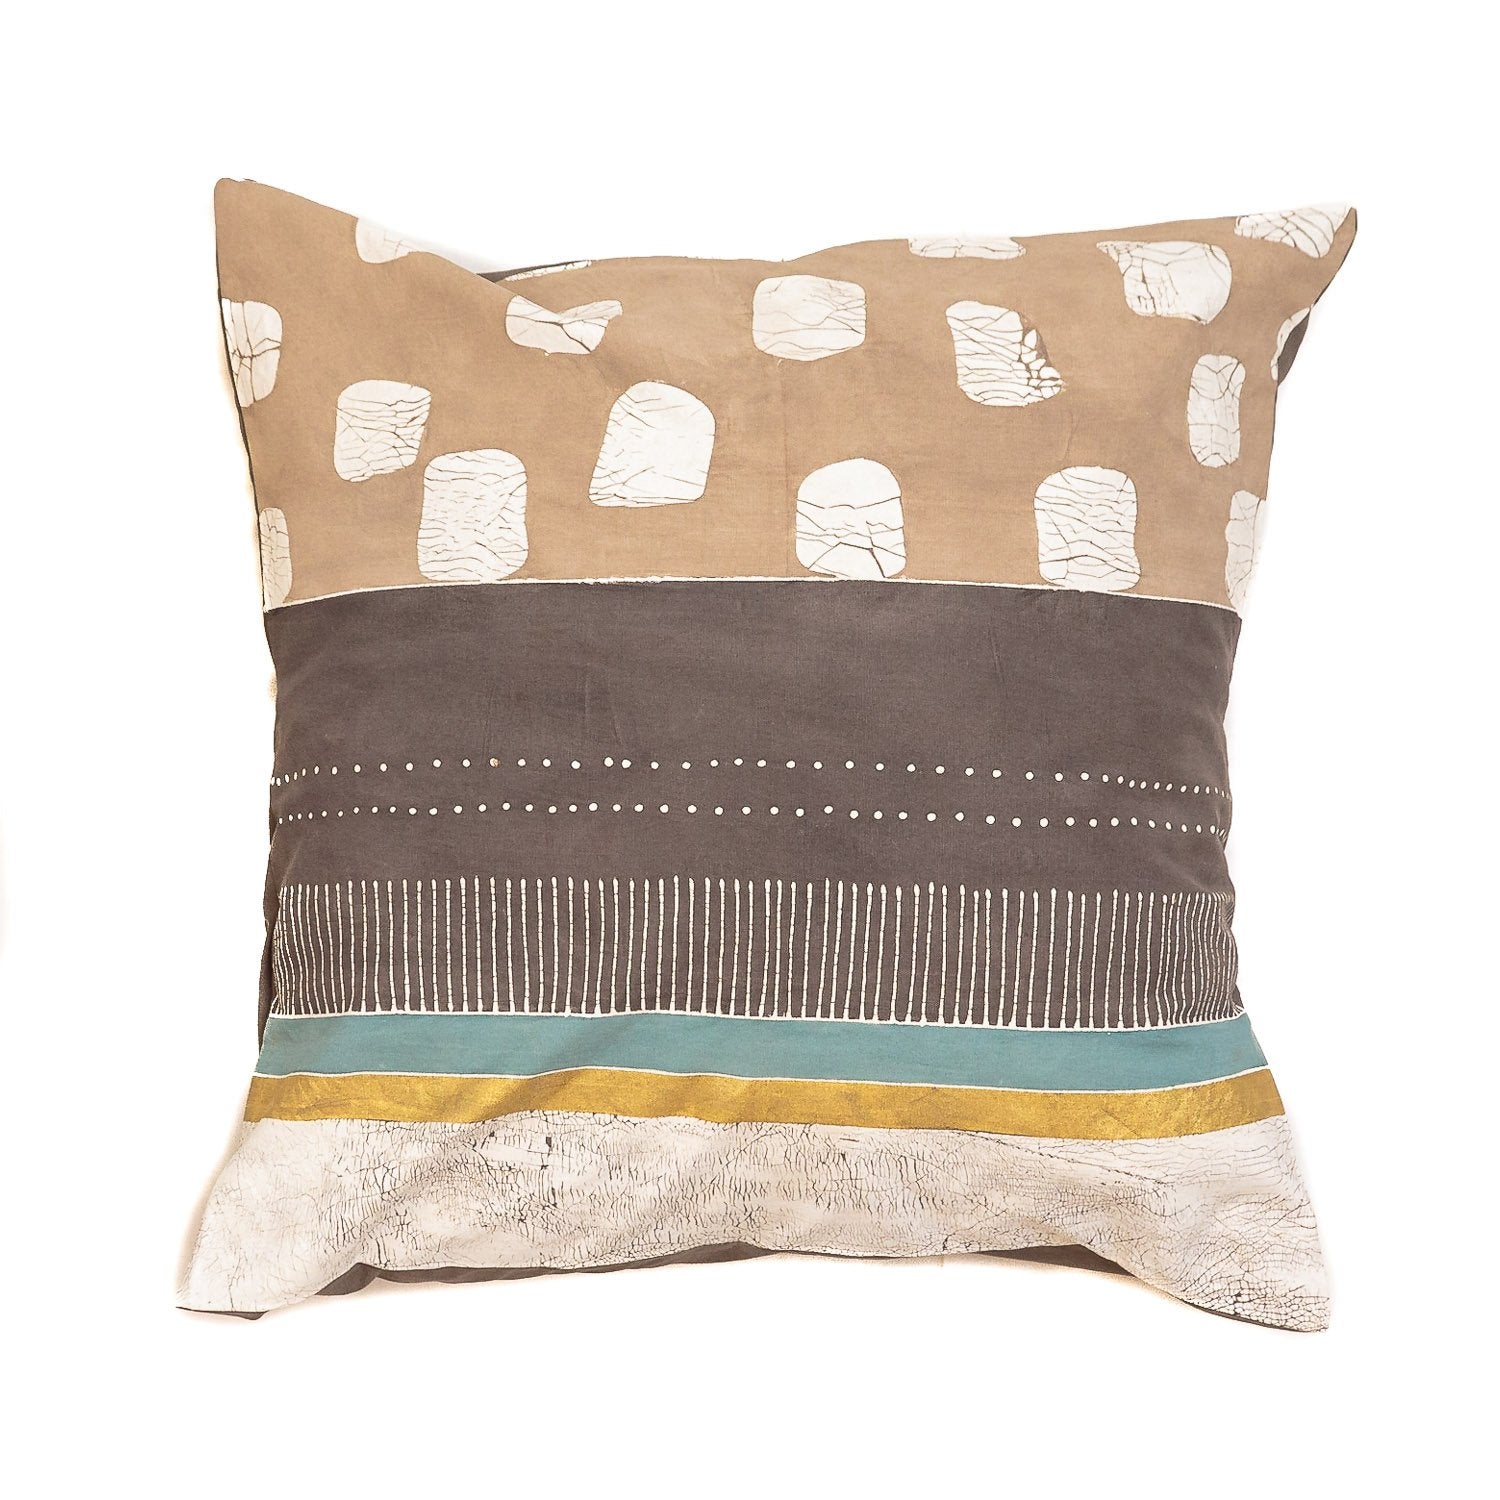 Vibrant Boho Multiprint Cushions by Tribal Textiles.